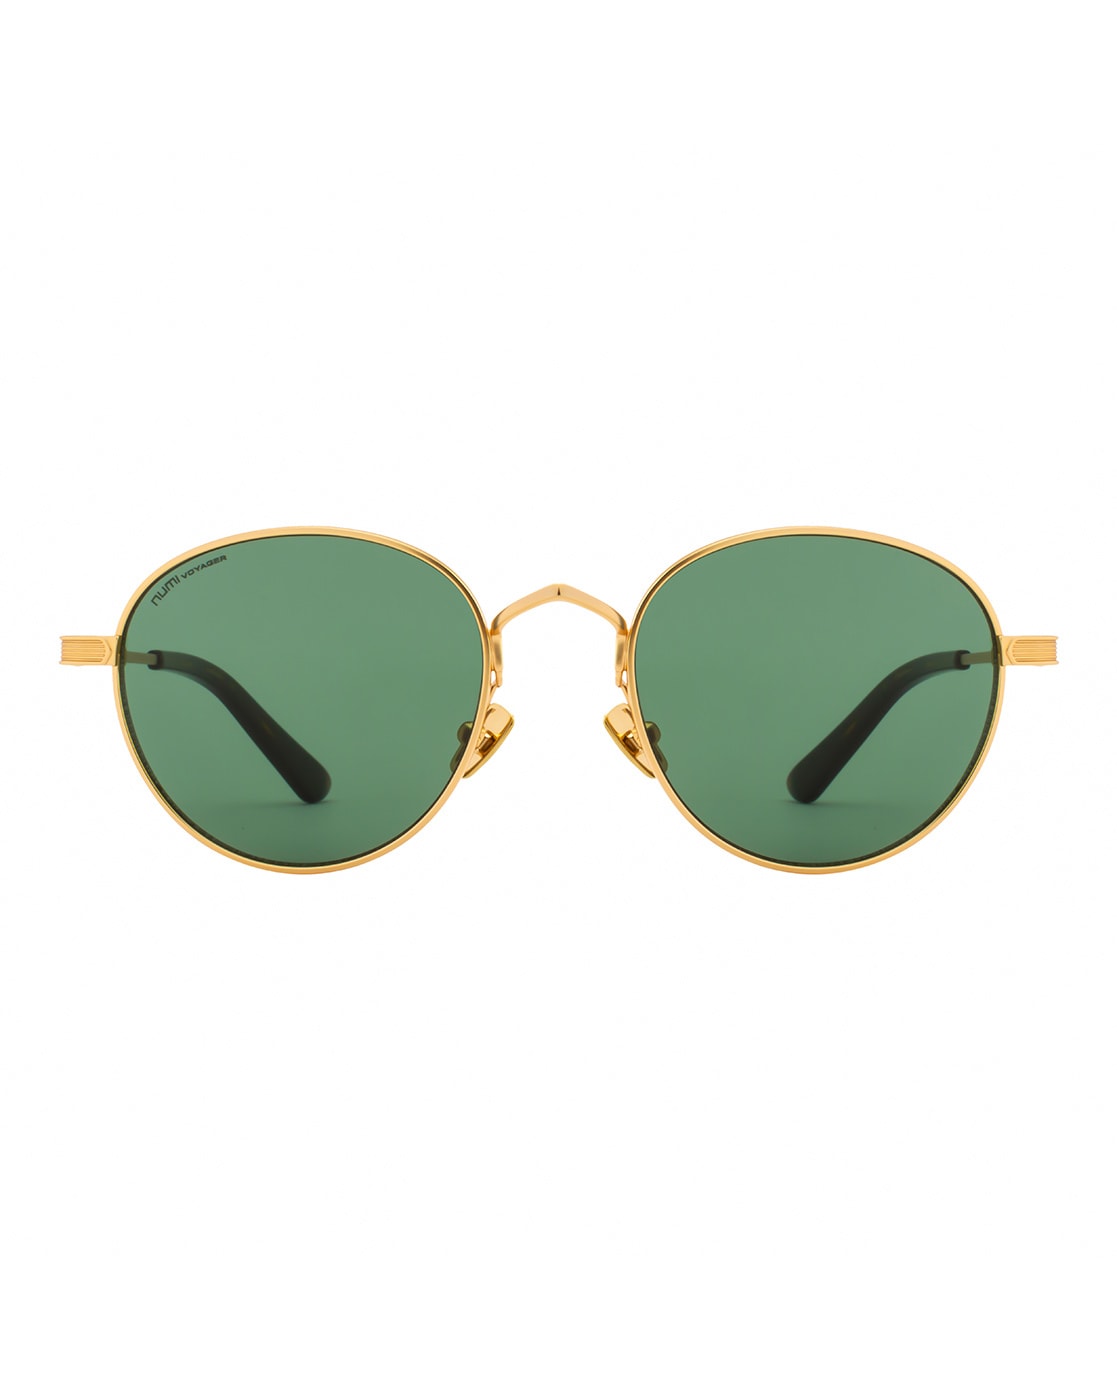 Small Round Green Lens Hippy Vintage Sunglasses - Chan | eBay